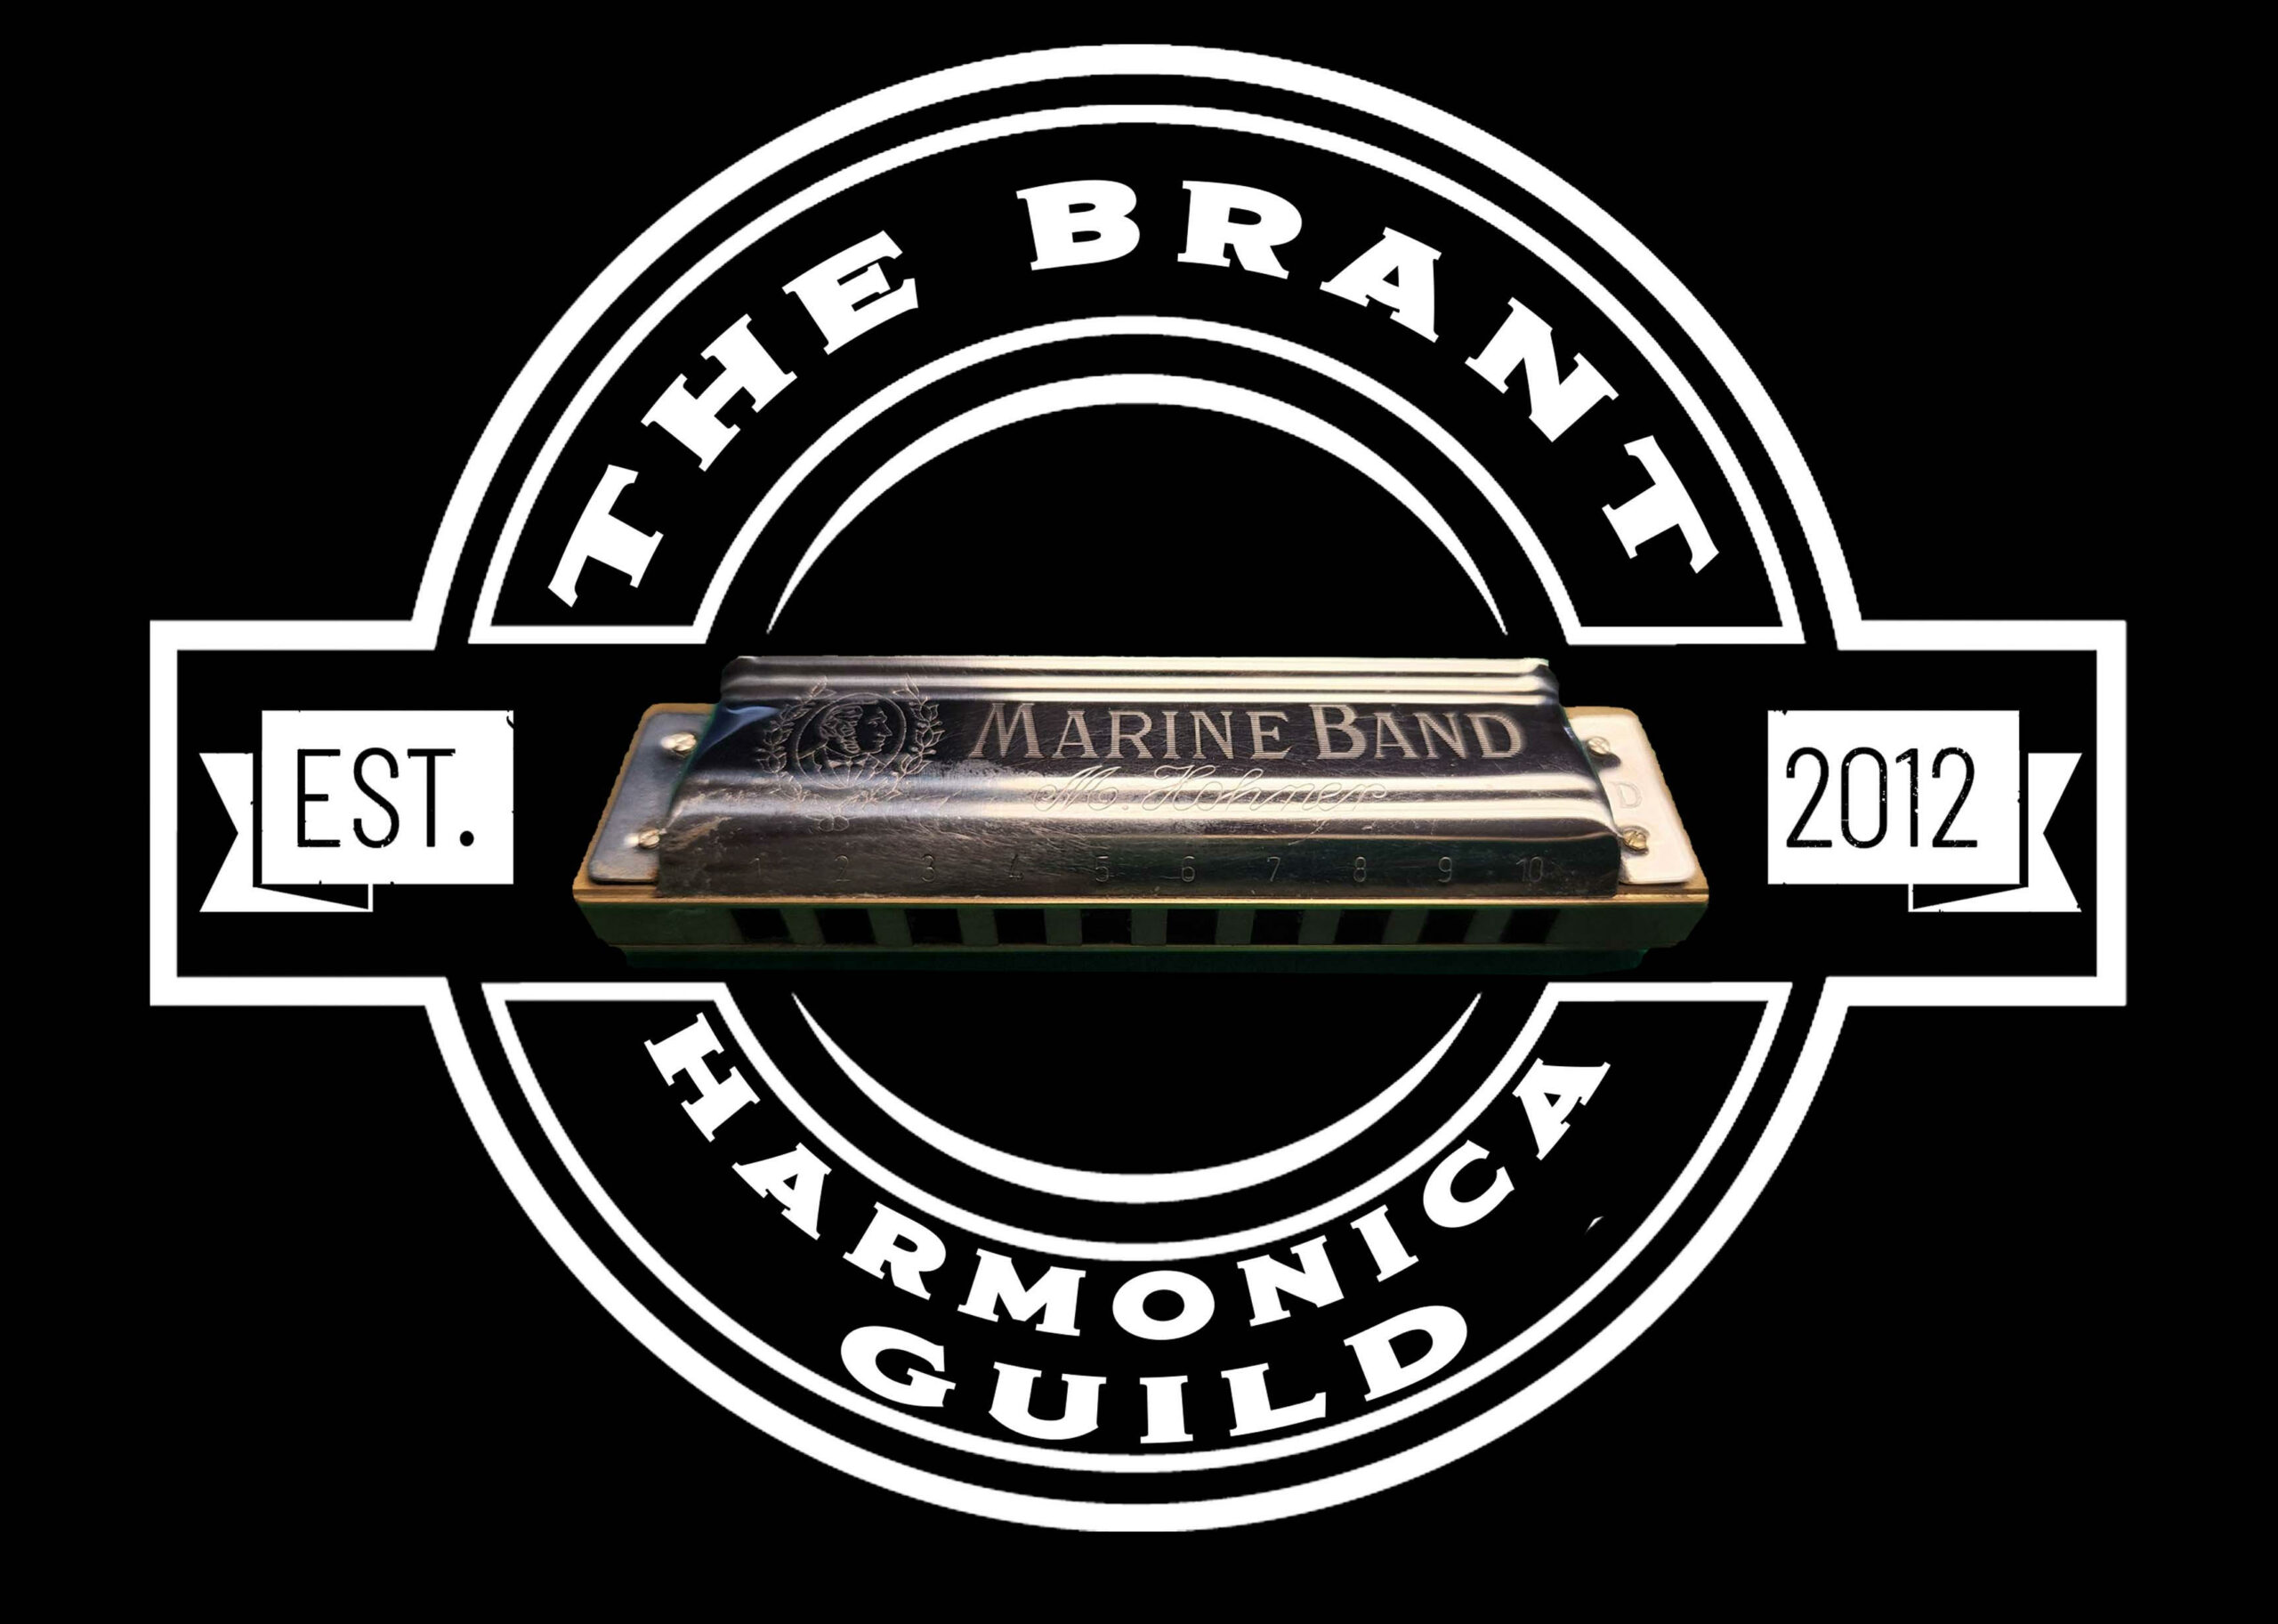 The Brant Harmonica Guild